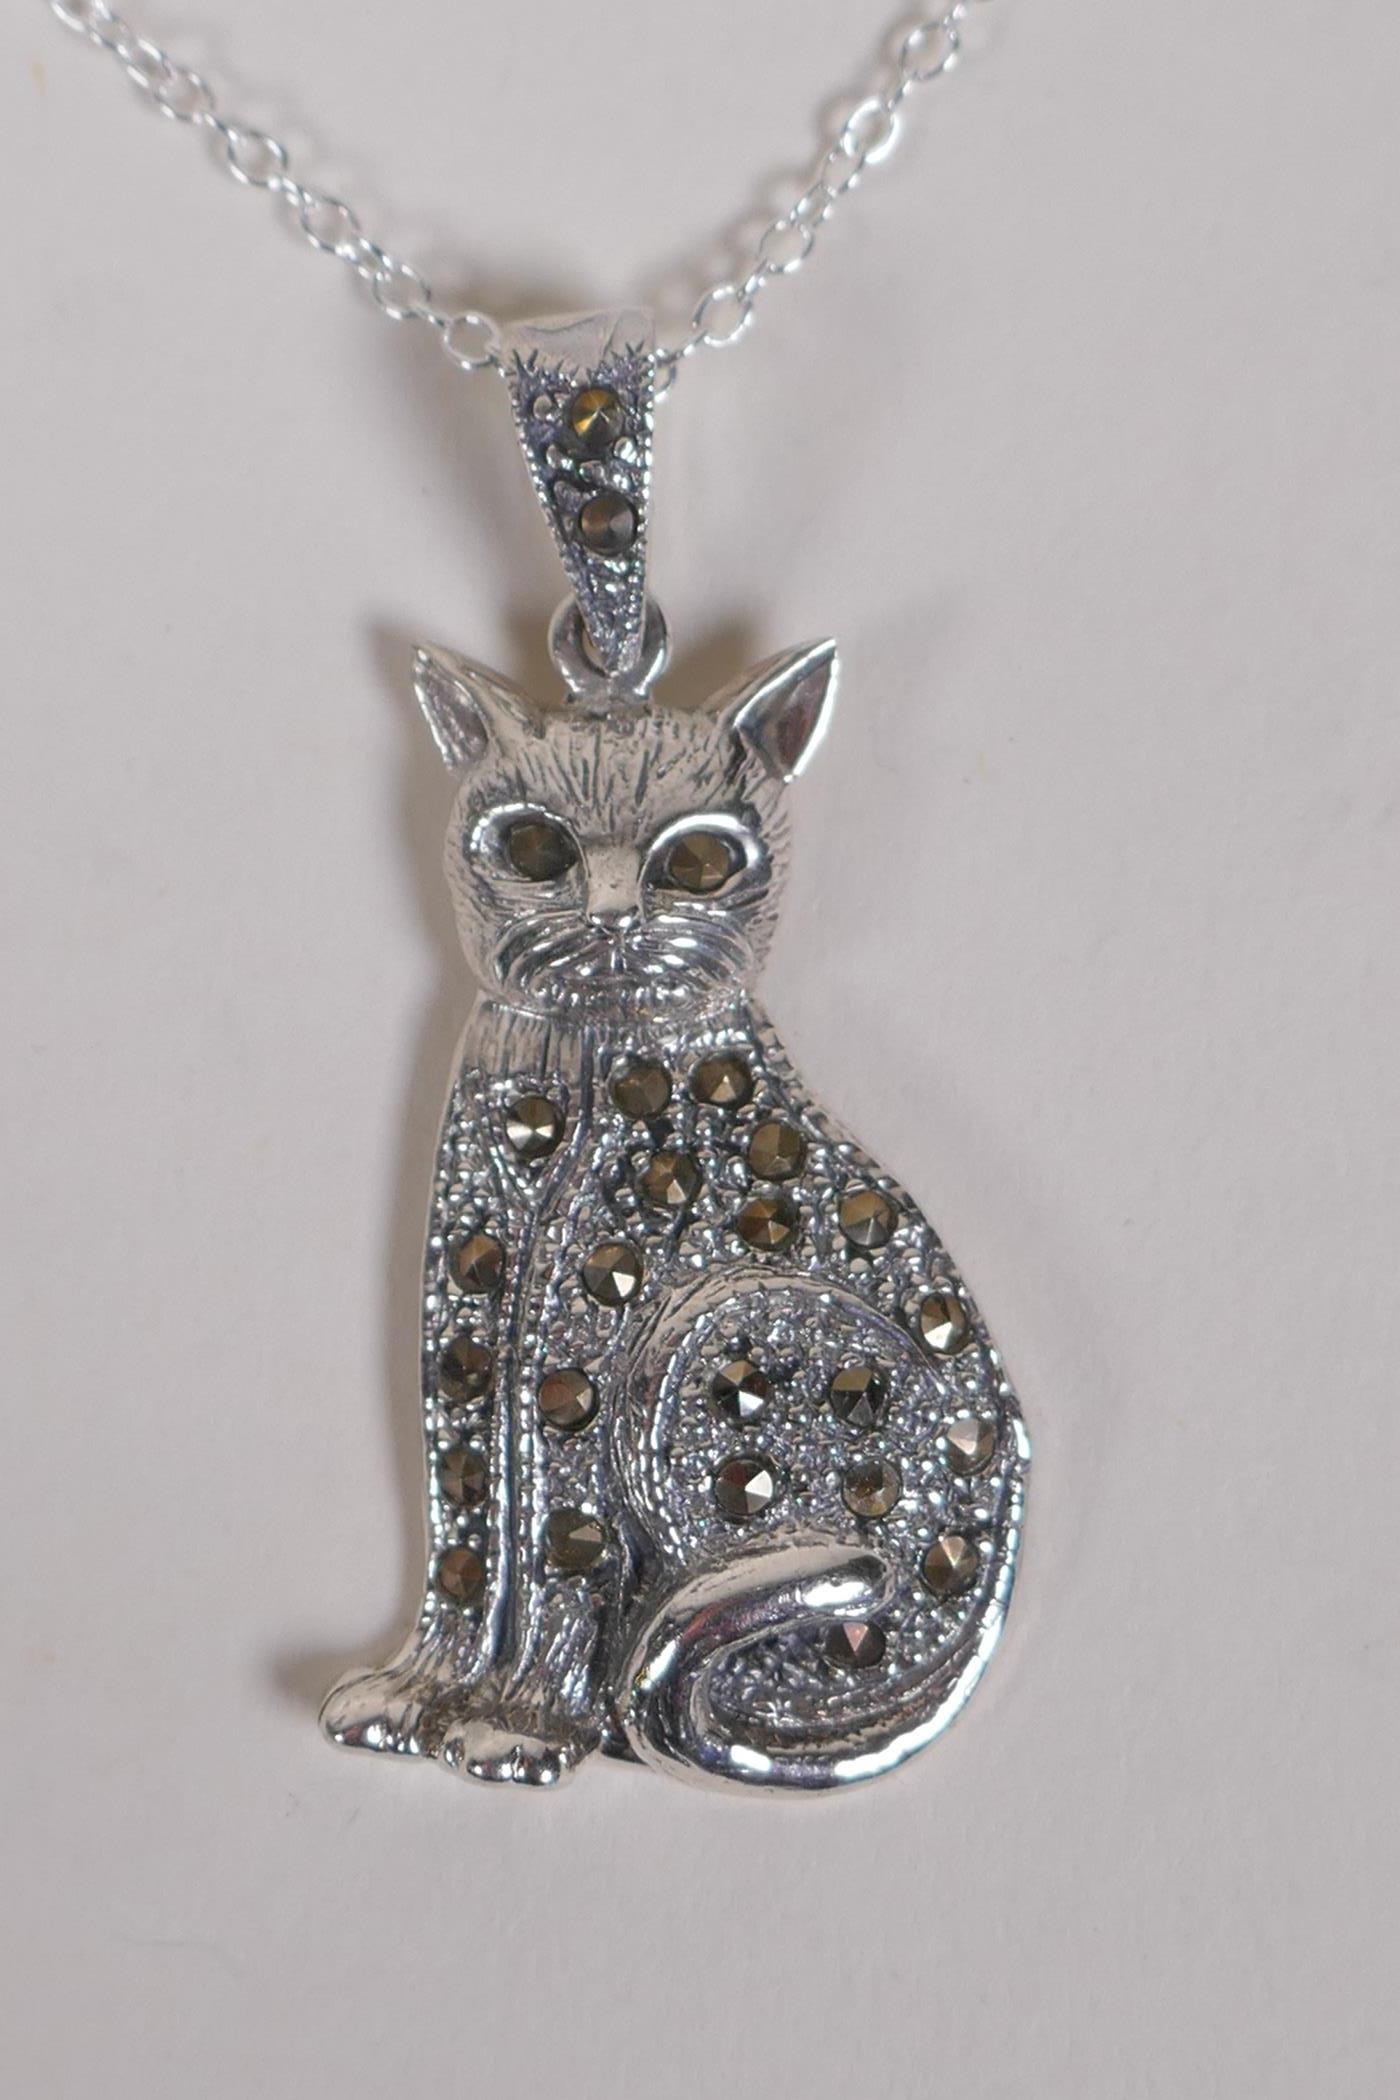 A silver and marcasite cat pendant necklace, 4cm drop